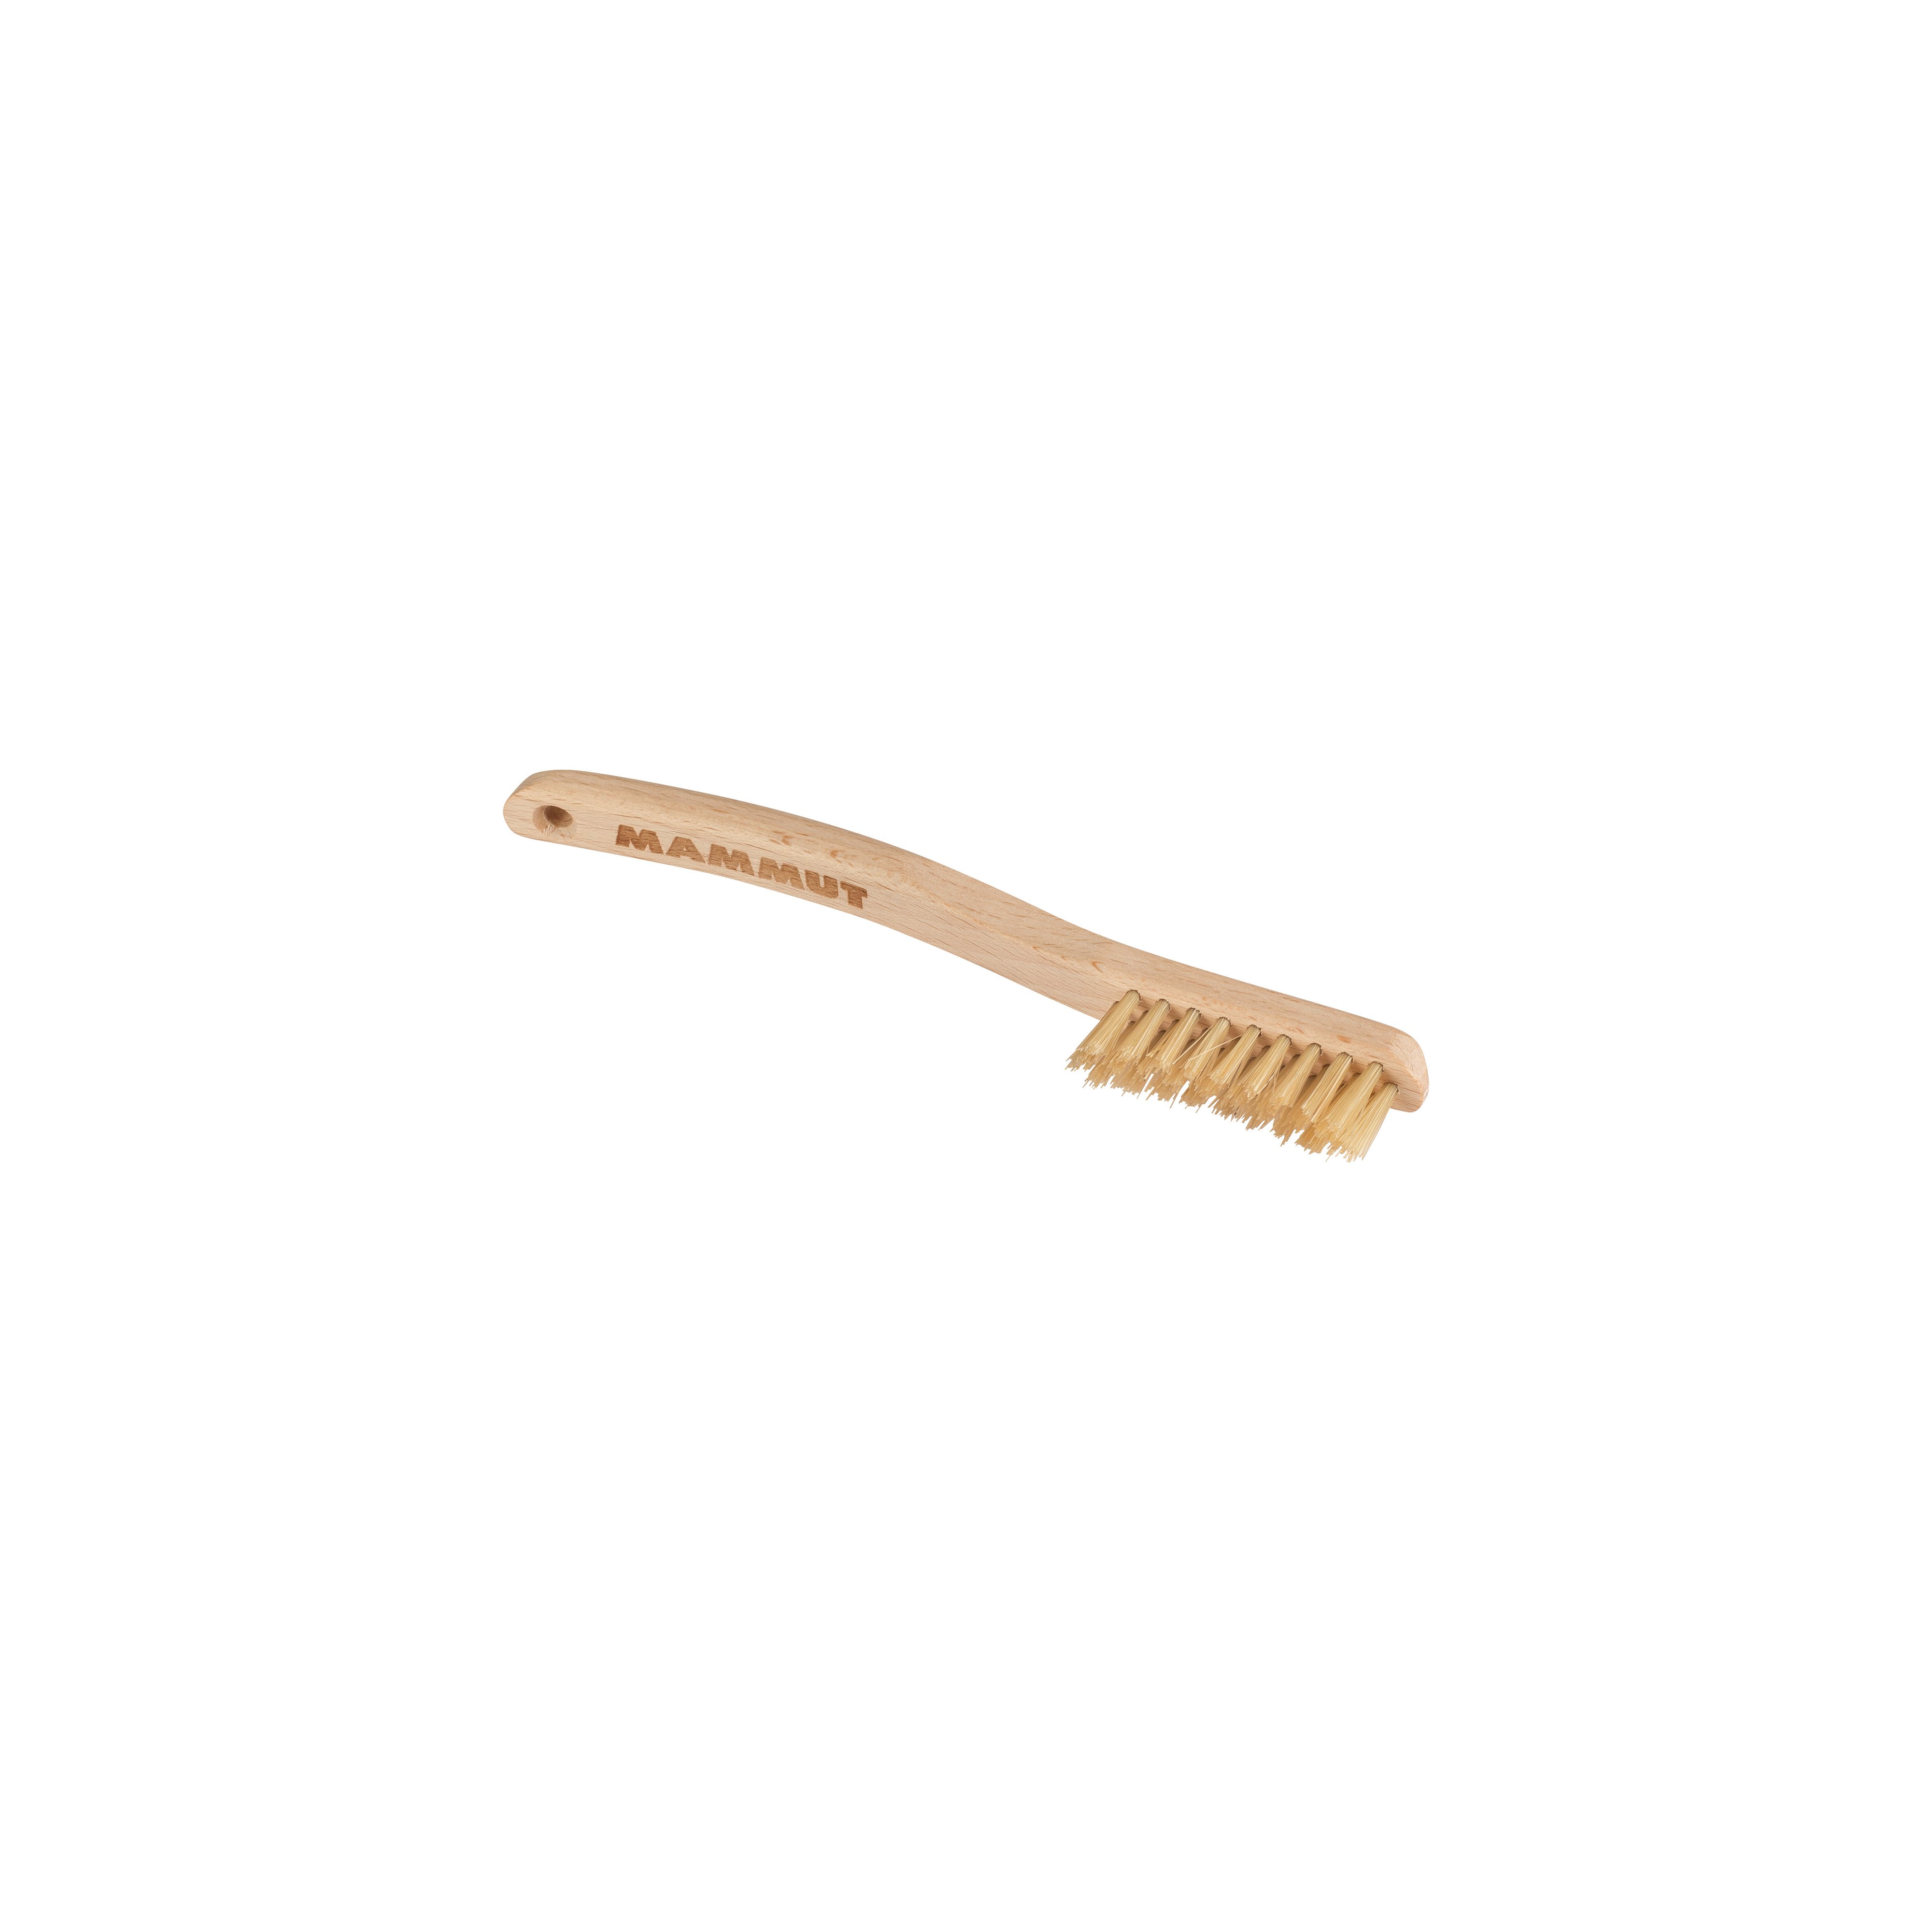 Boulder Brush Micro - wood, one size product image